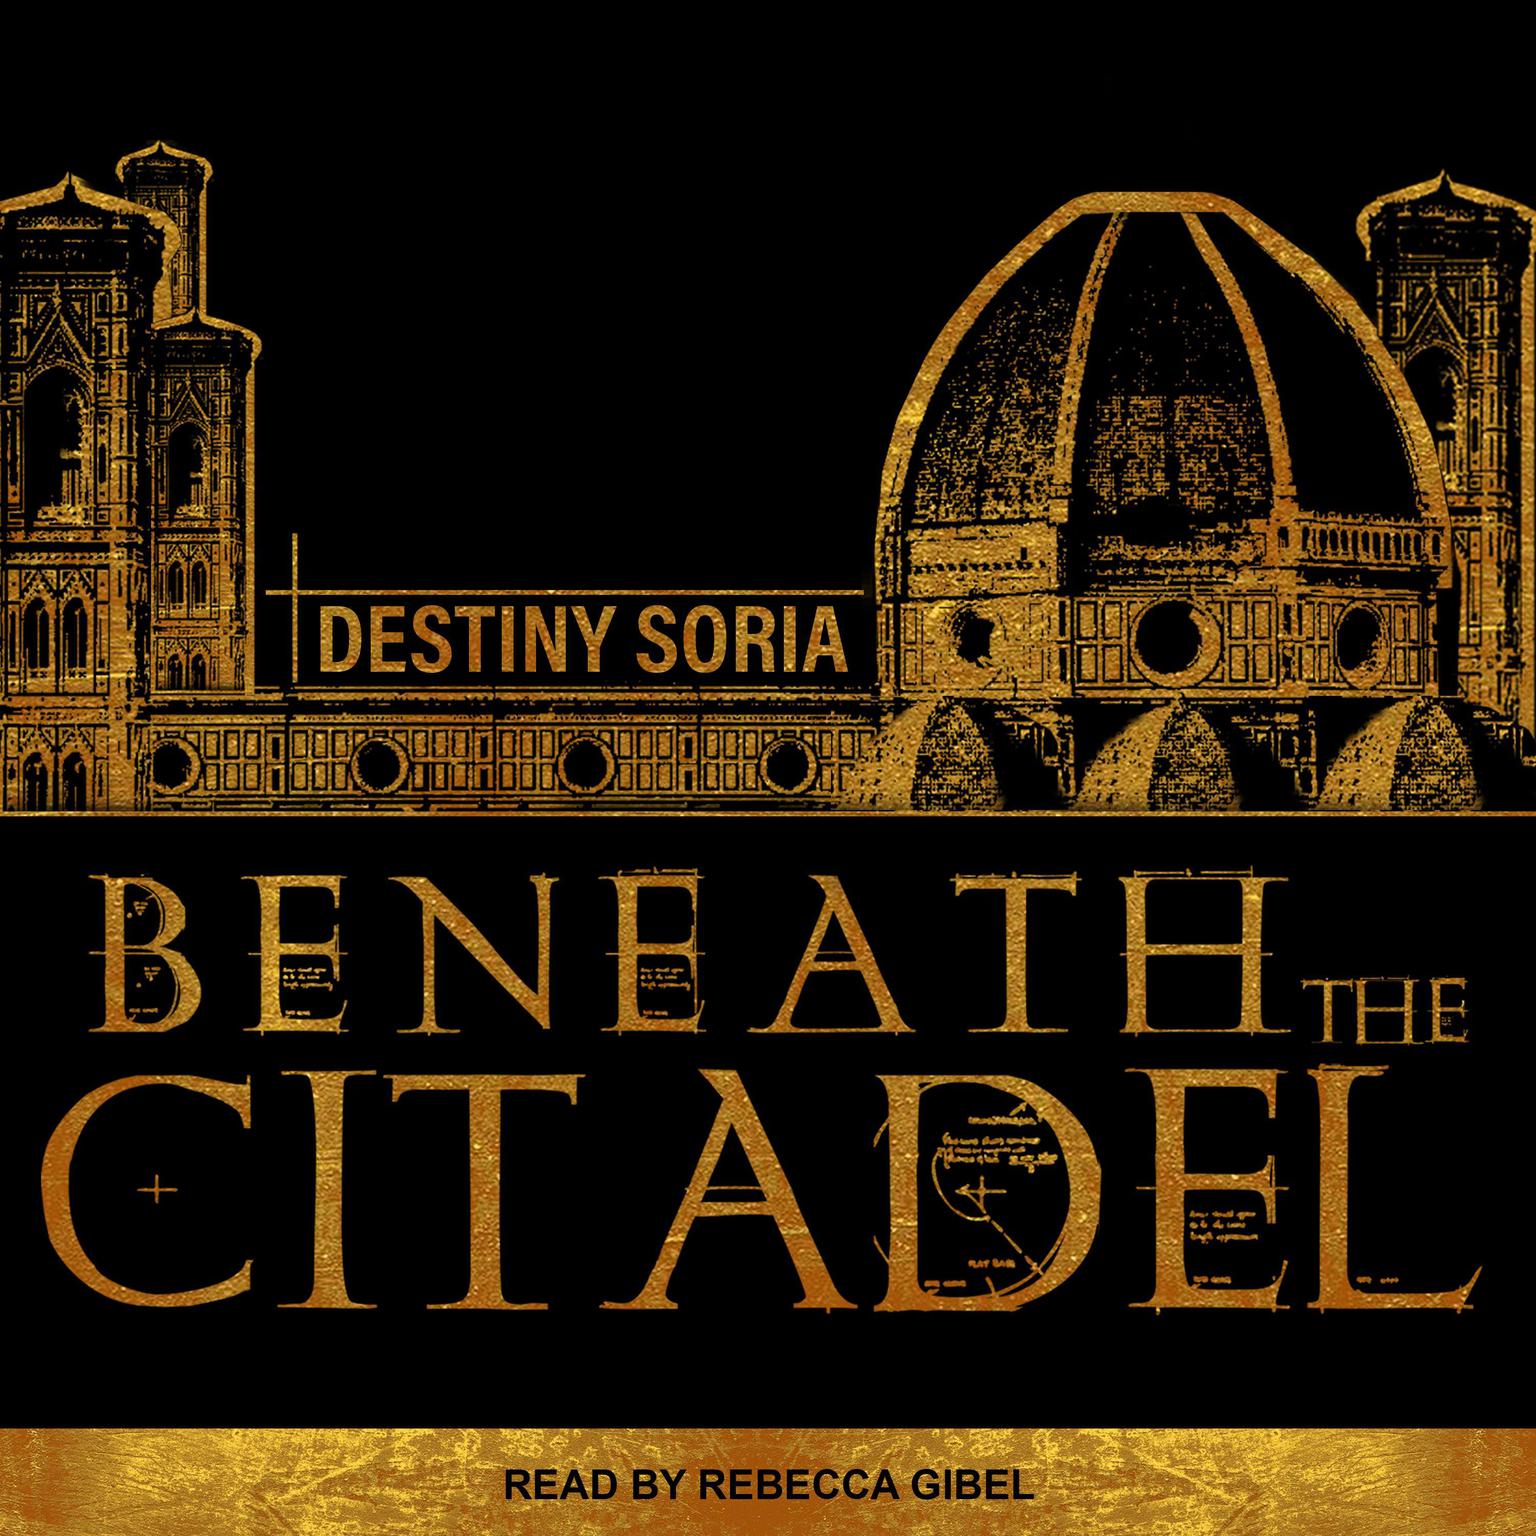 Beneath the Citadel Audiobook, by Destiny Soria